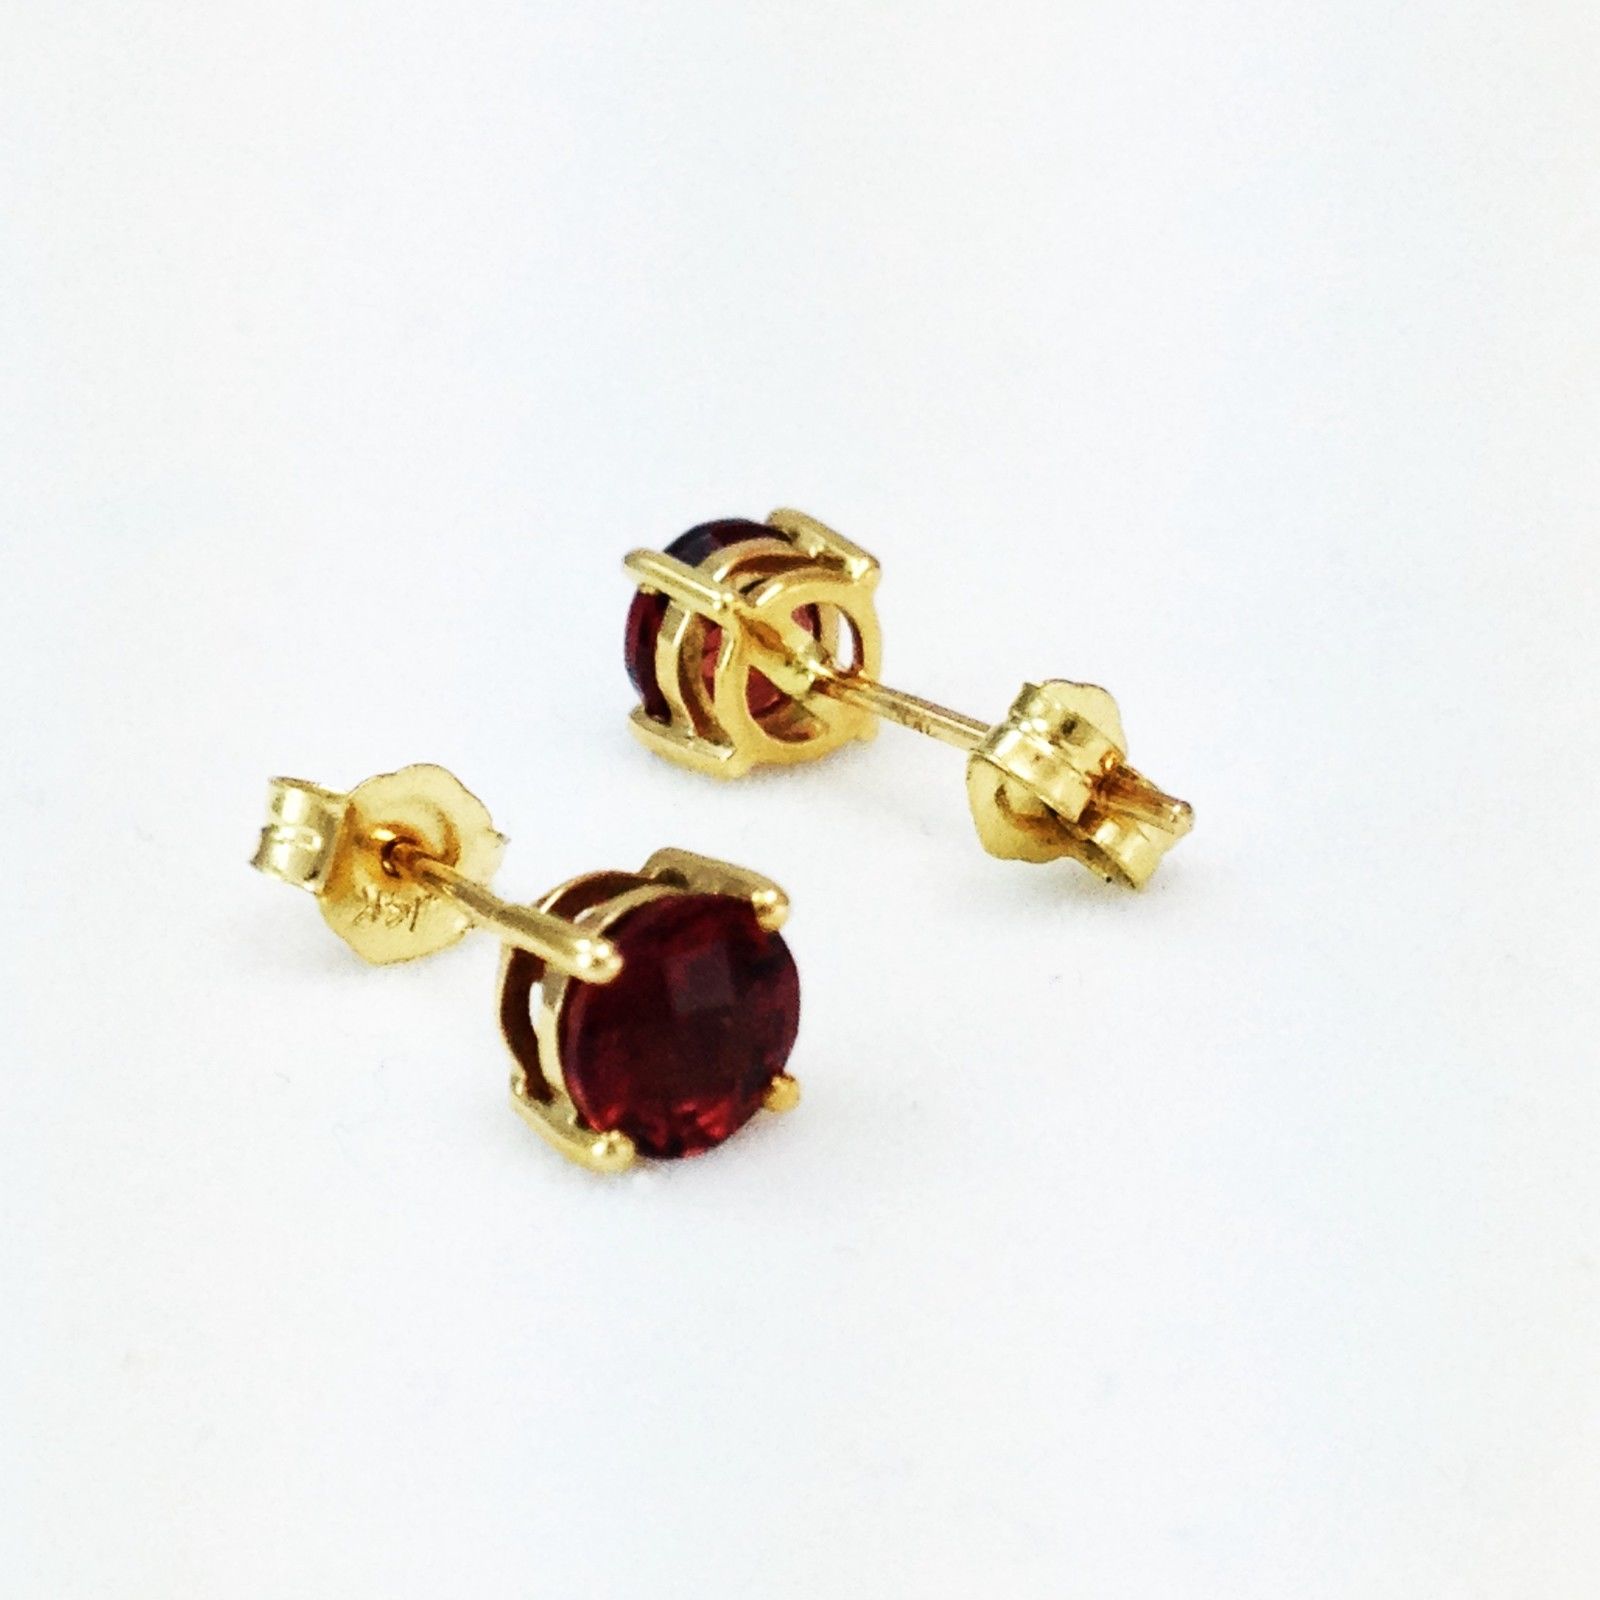 Genuine Garnet 1.3 cttw 5mm 14K yellow gold Earrings NWT $344